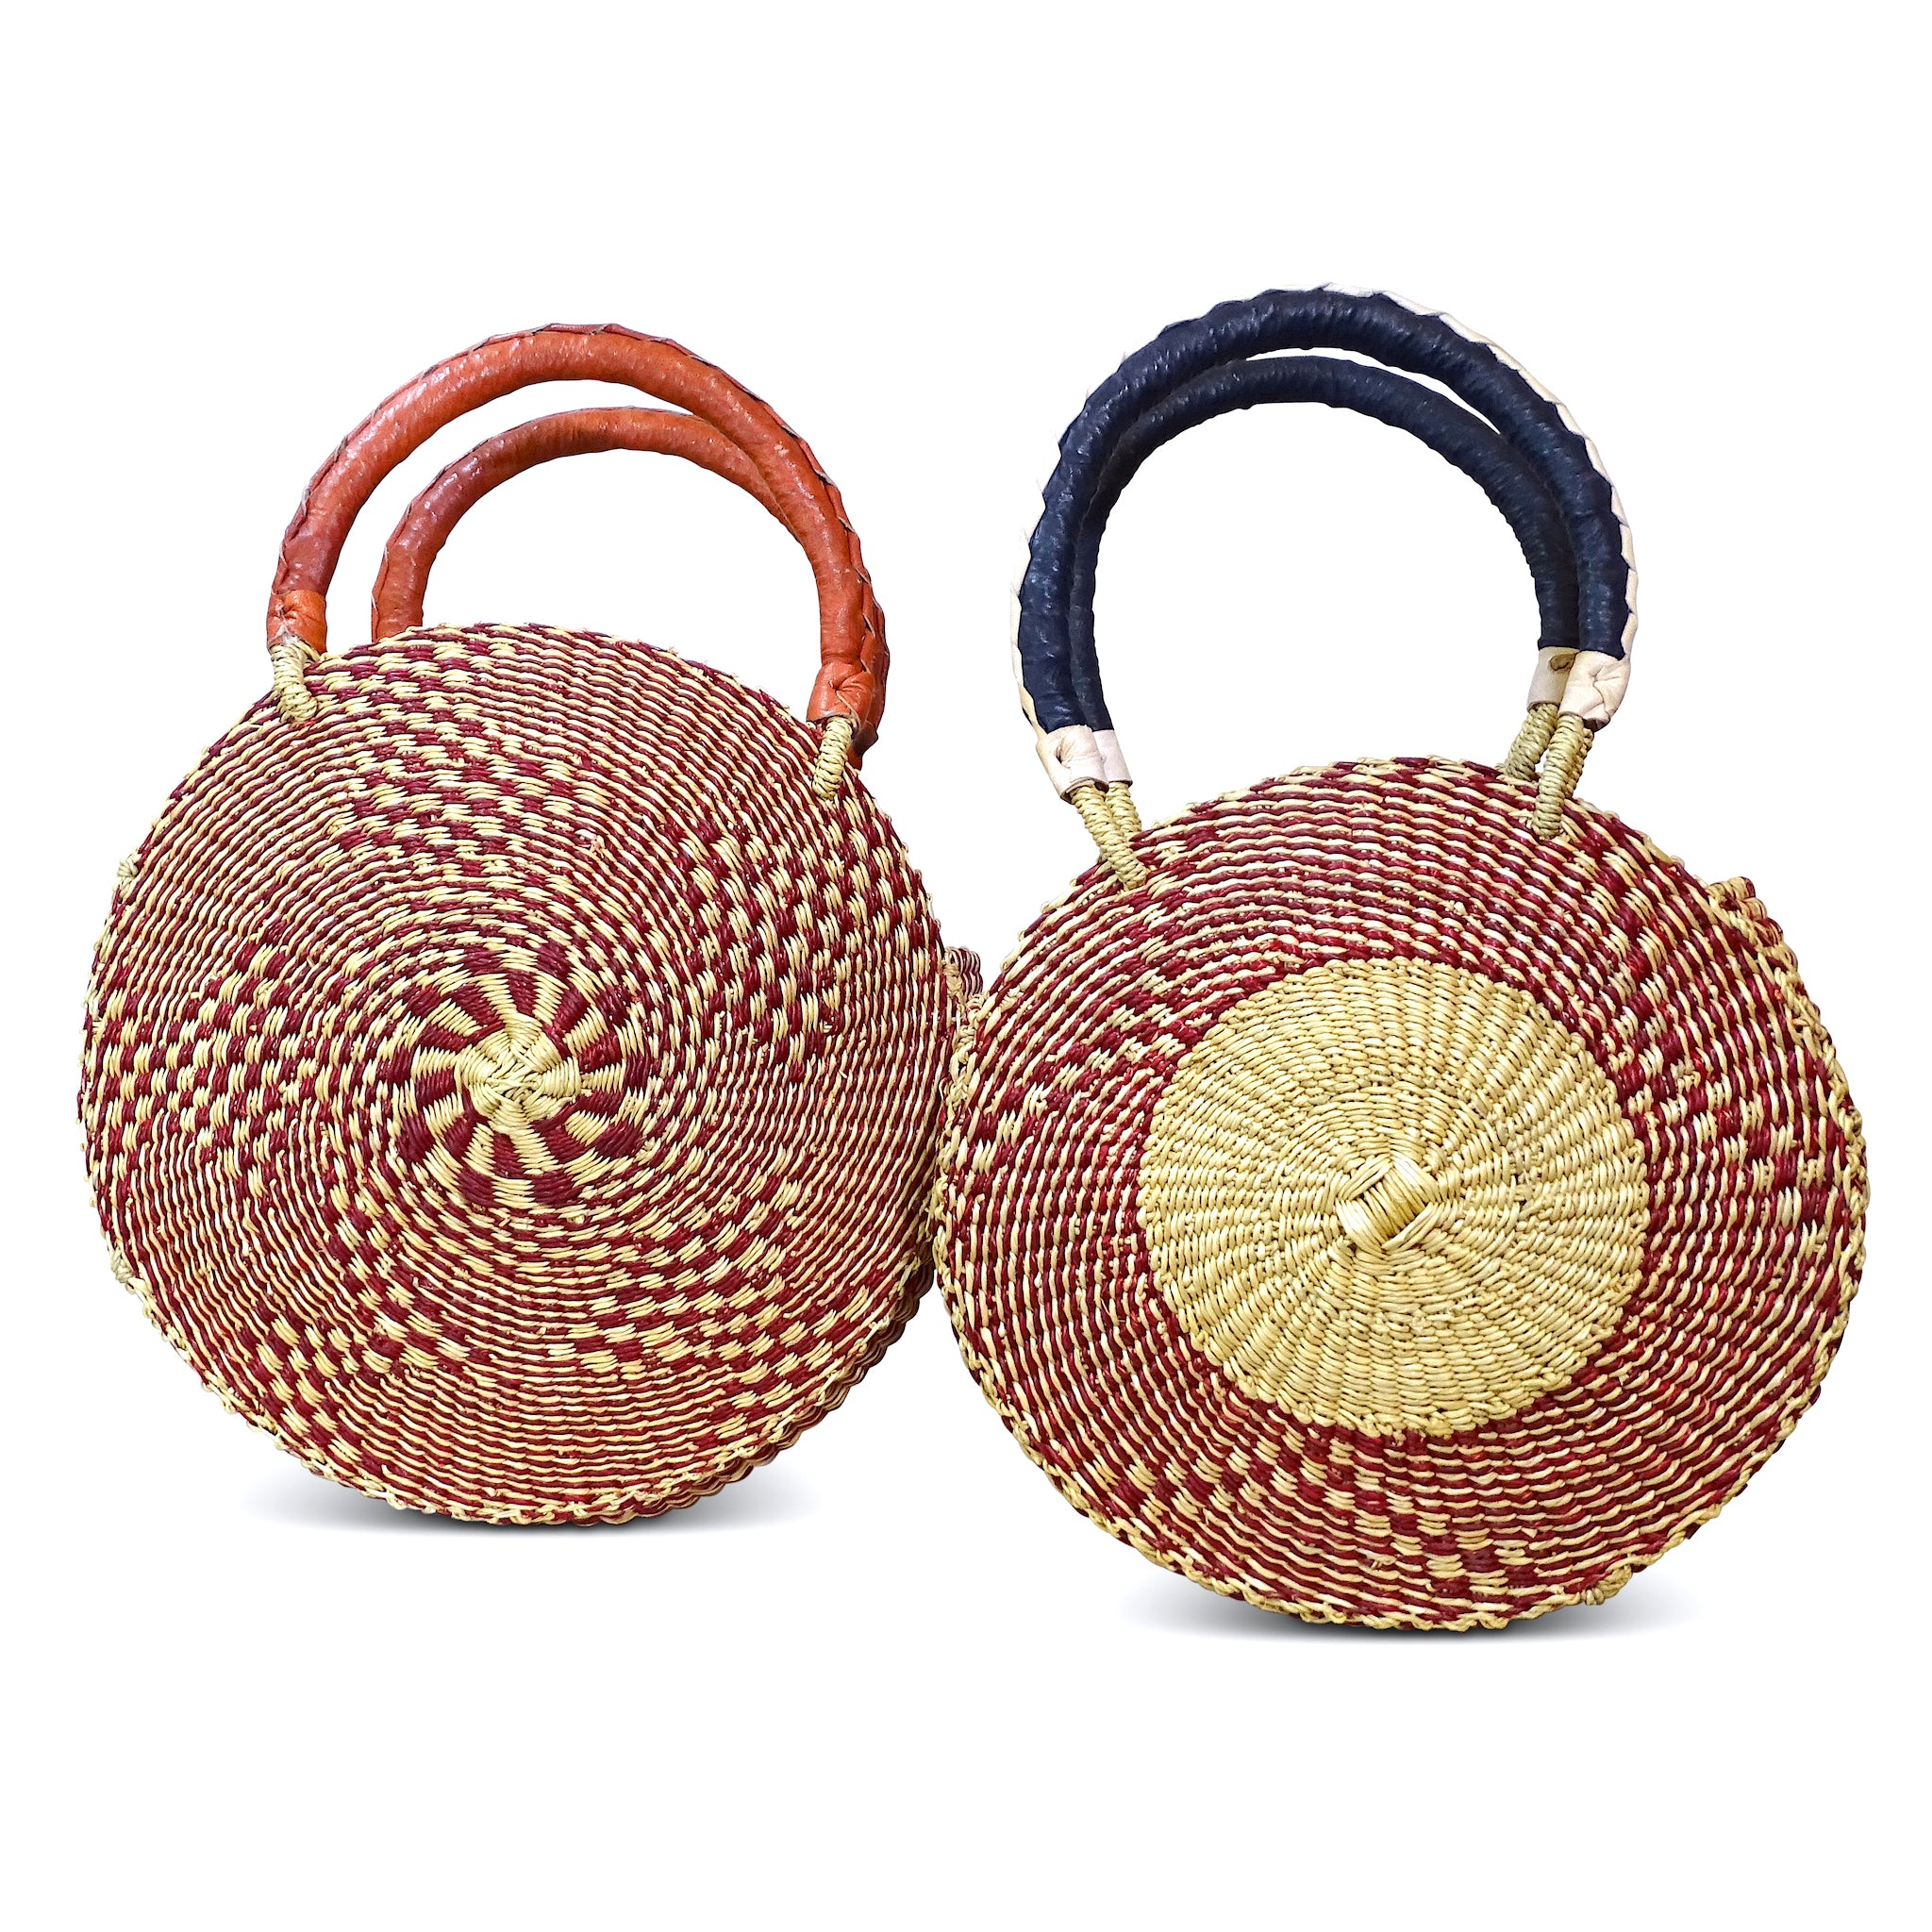 Buy Straw Summer Bucket Bag With Wooden Handle, Round Wicker Handbag  Basket, Summer Purse, Beach Tote Online in India - Etsy